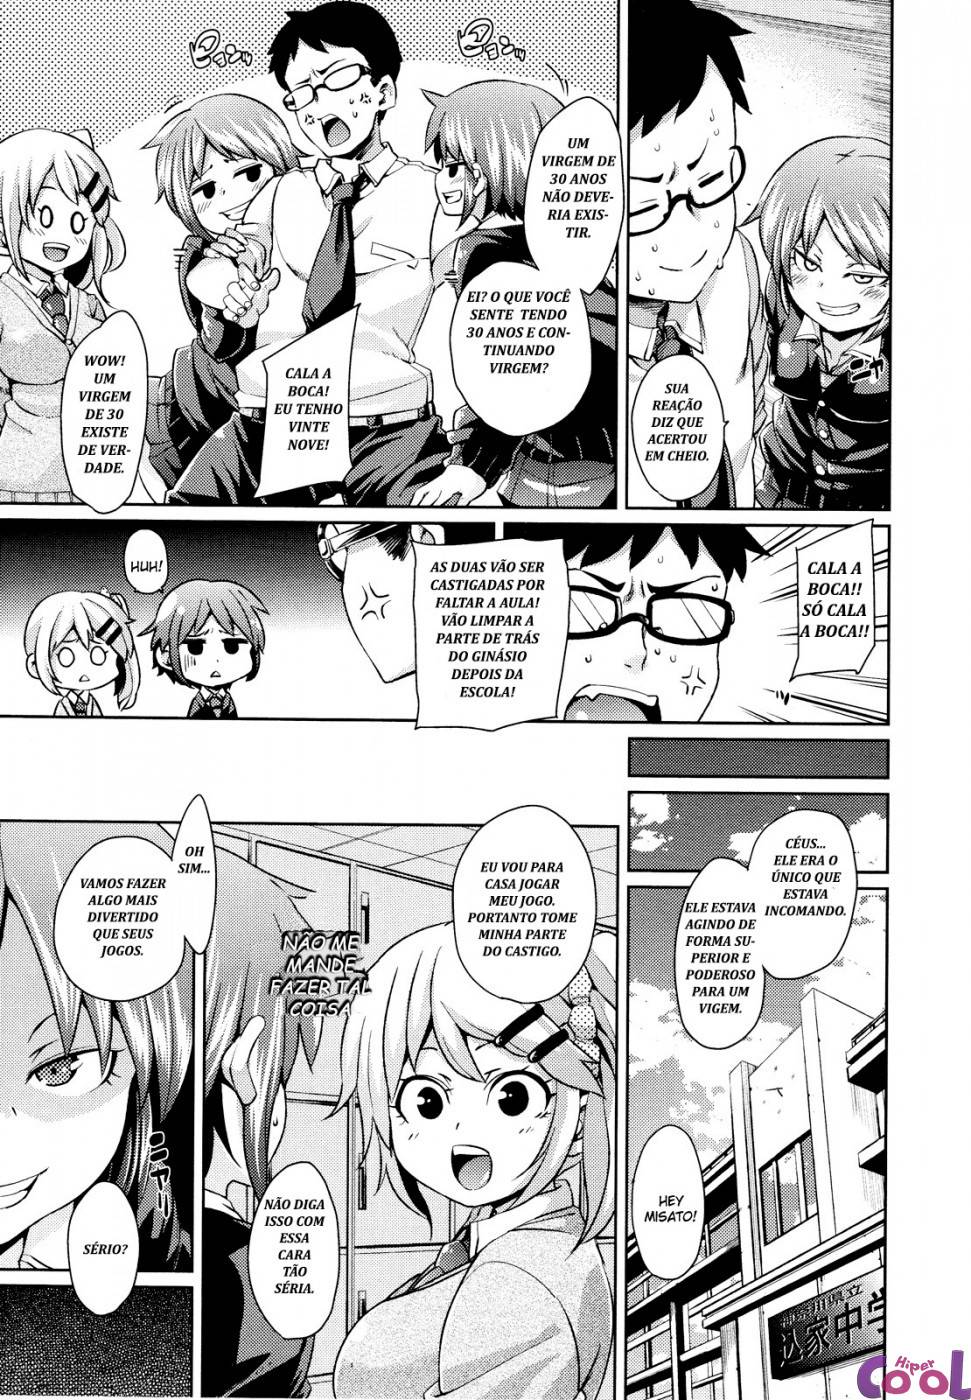 sensei-urusai-w-chapter-01-page-04.jpg